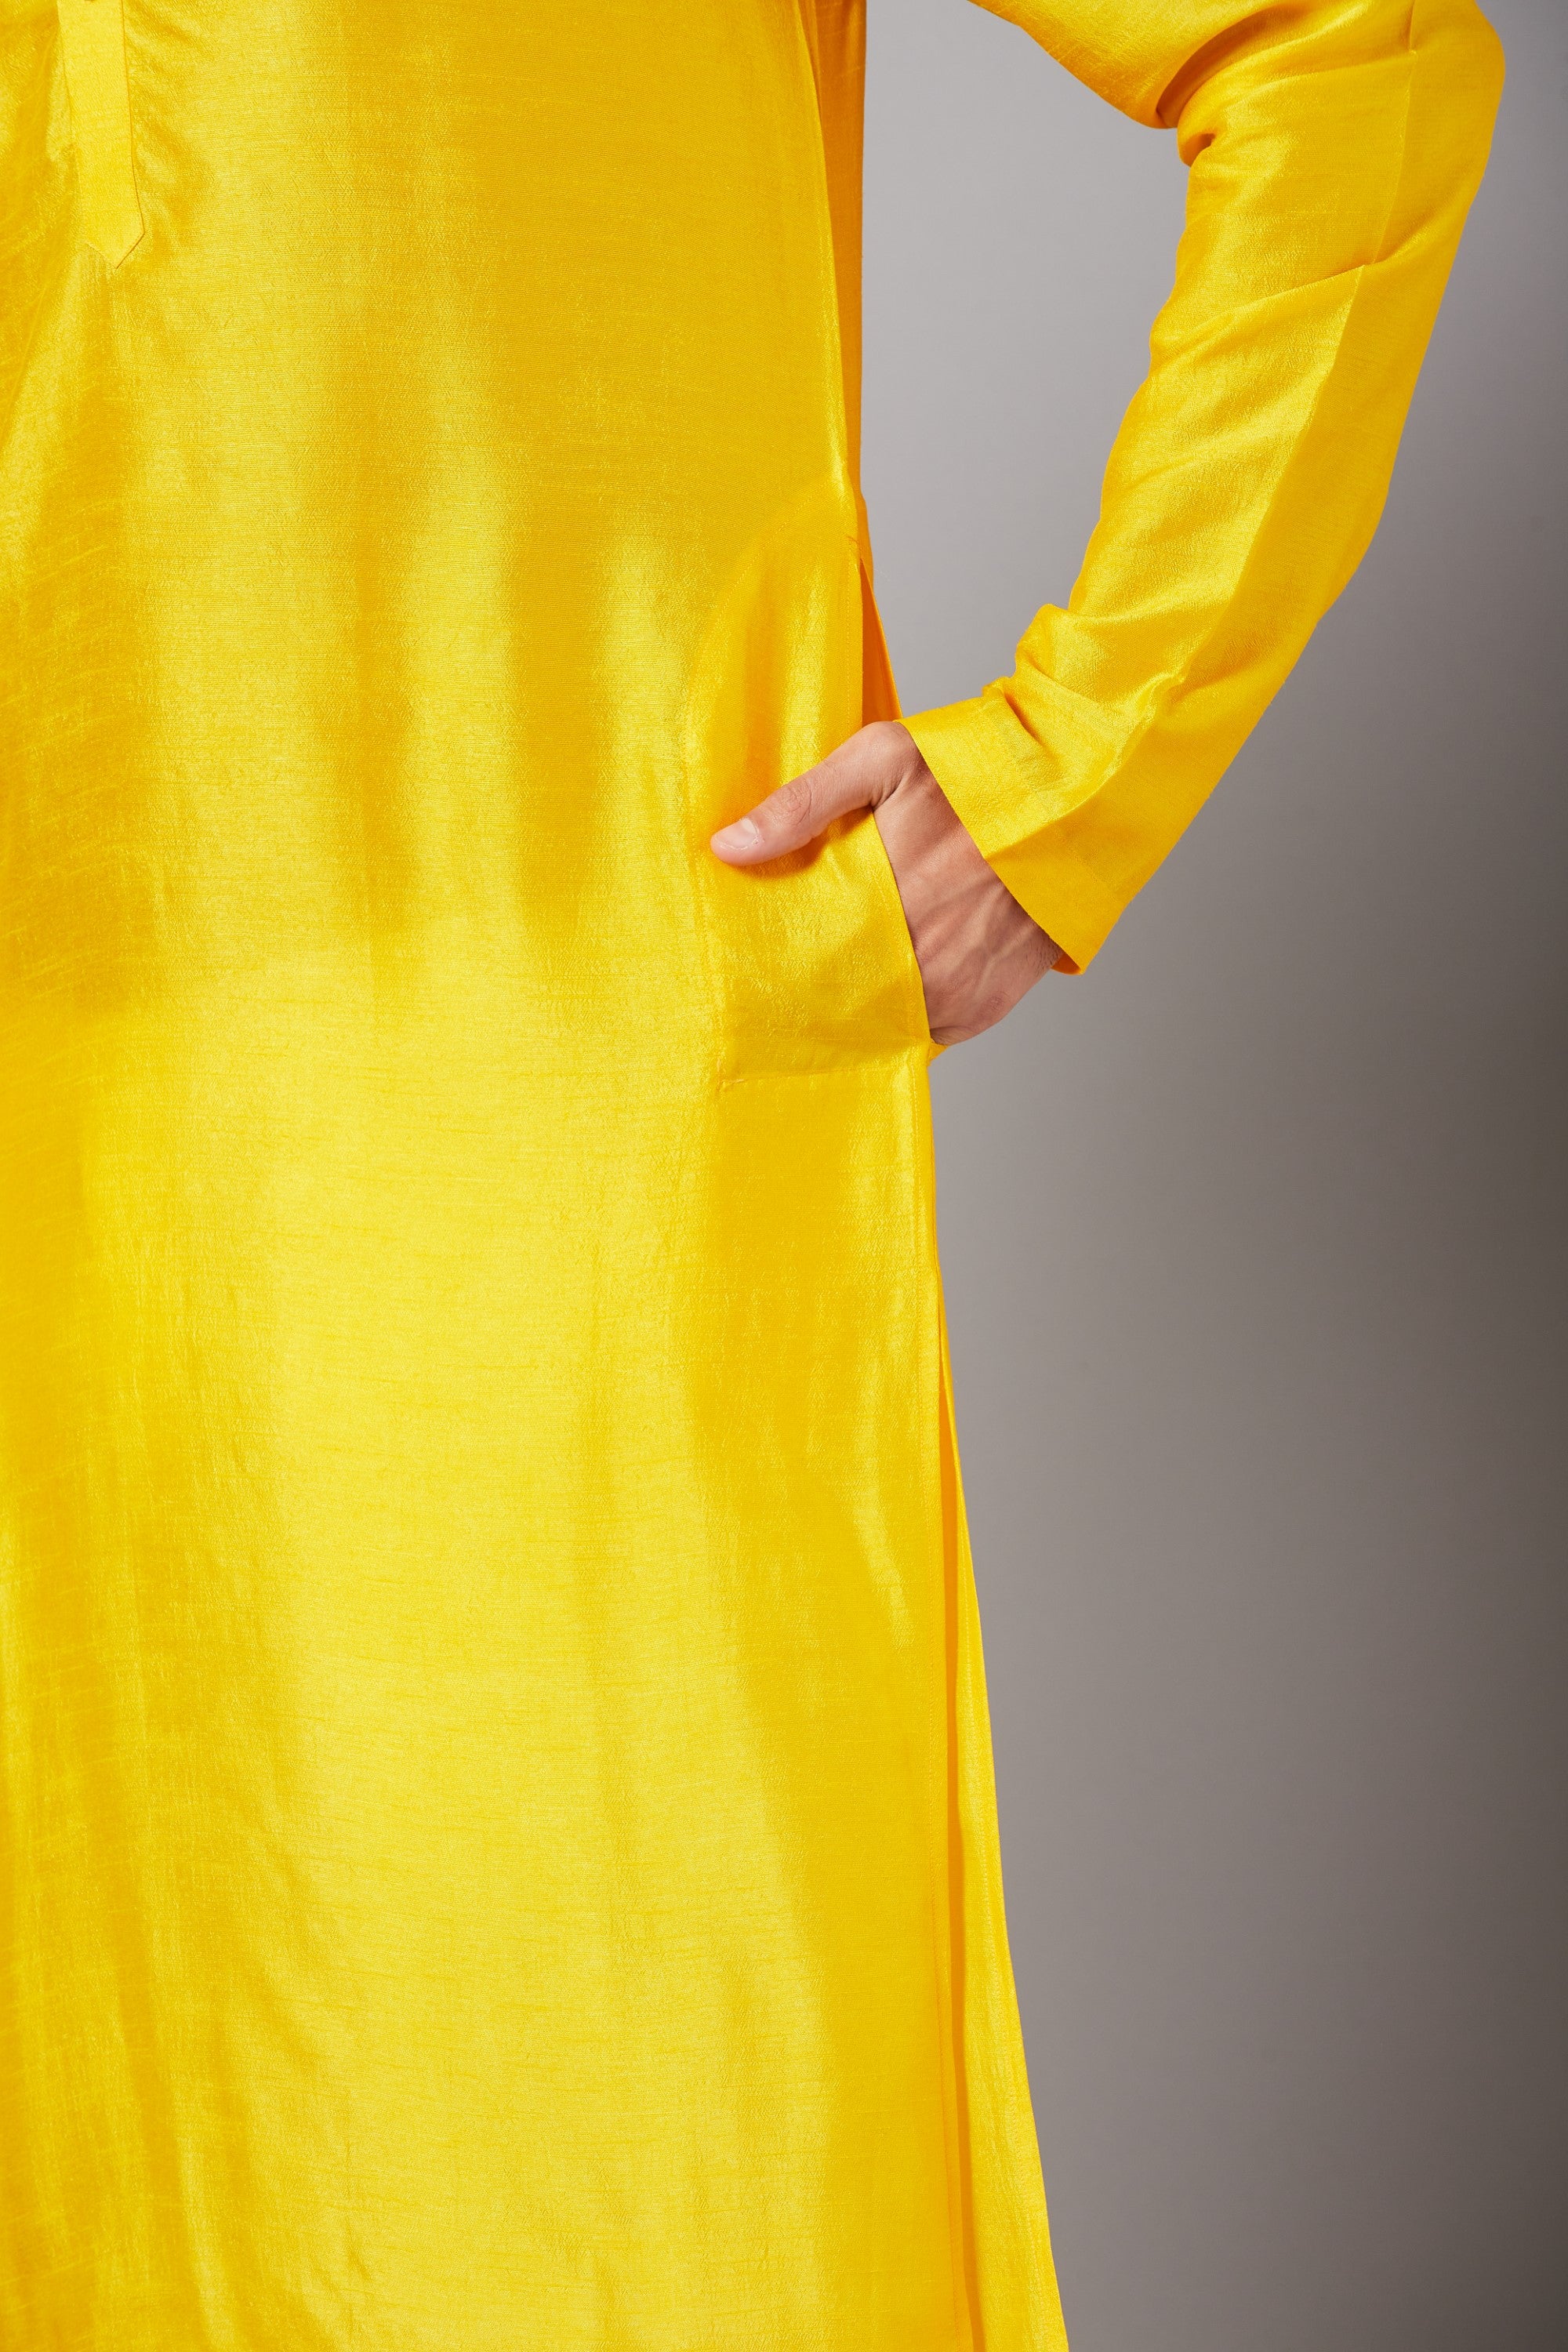 Men's Yellow Color Plain Kurta Falling Raw Silk - Hilo Design